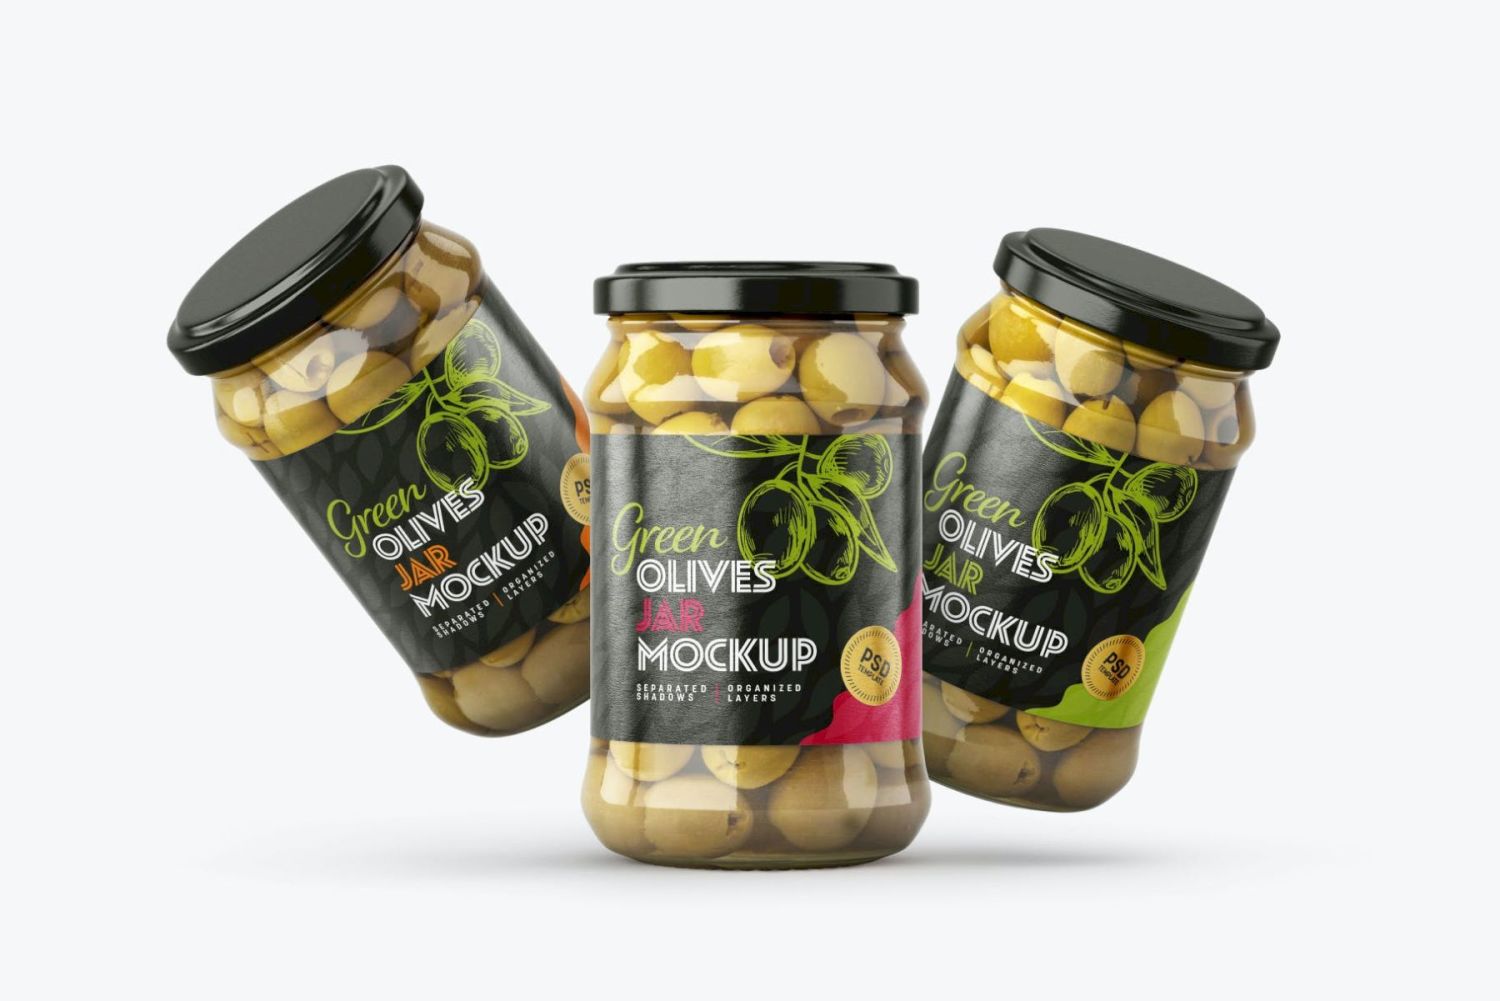 橄榄罐样机套装 Olives Jar Mockup Set插图2